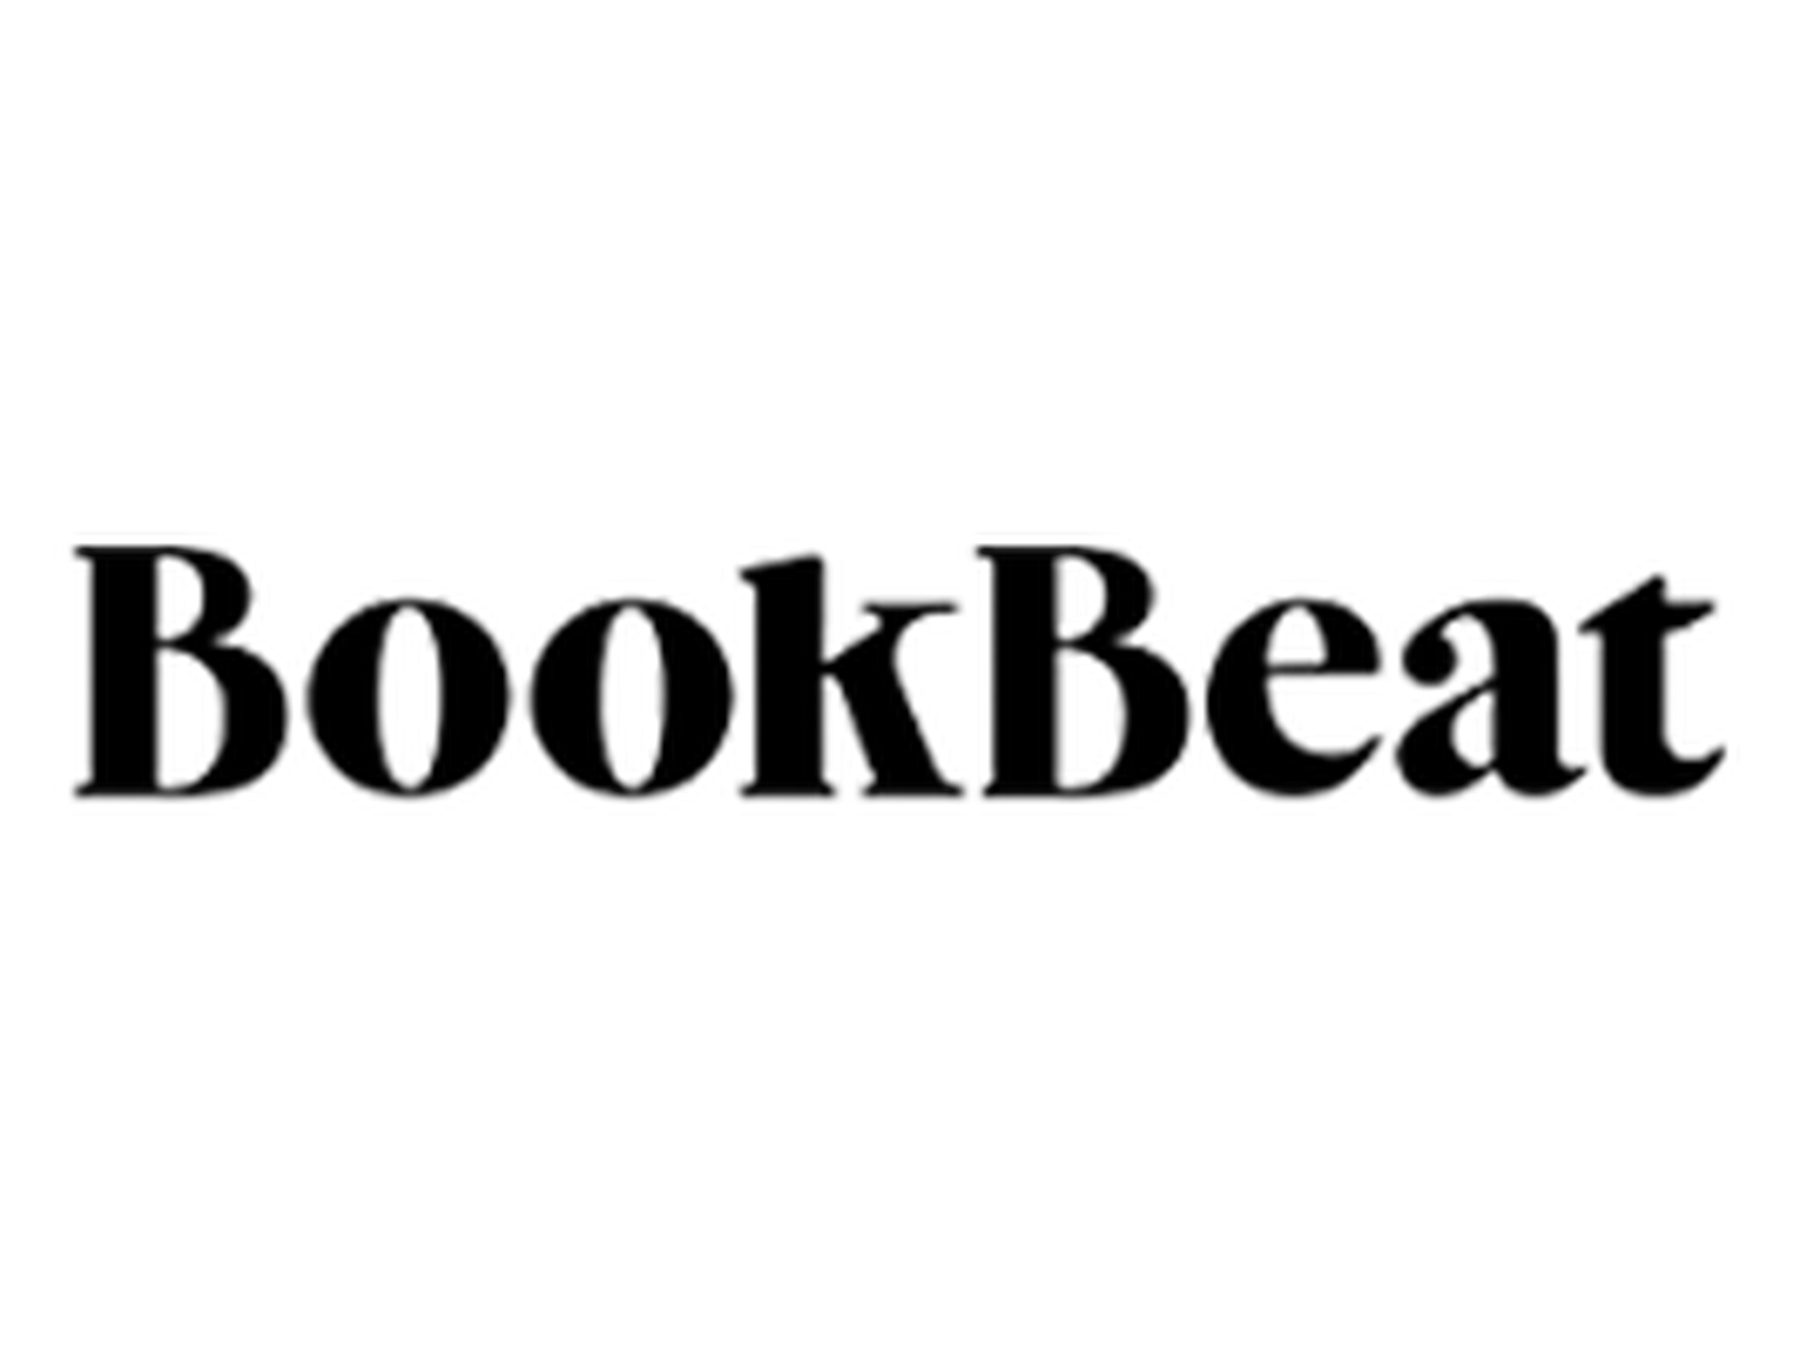 BookBeat actiecode